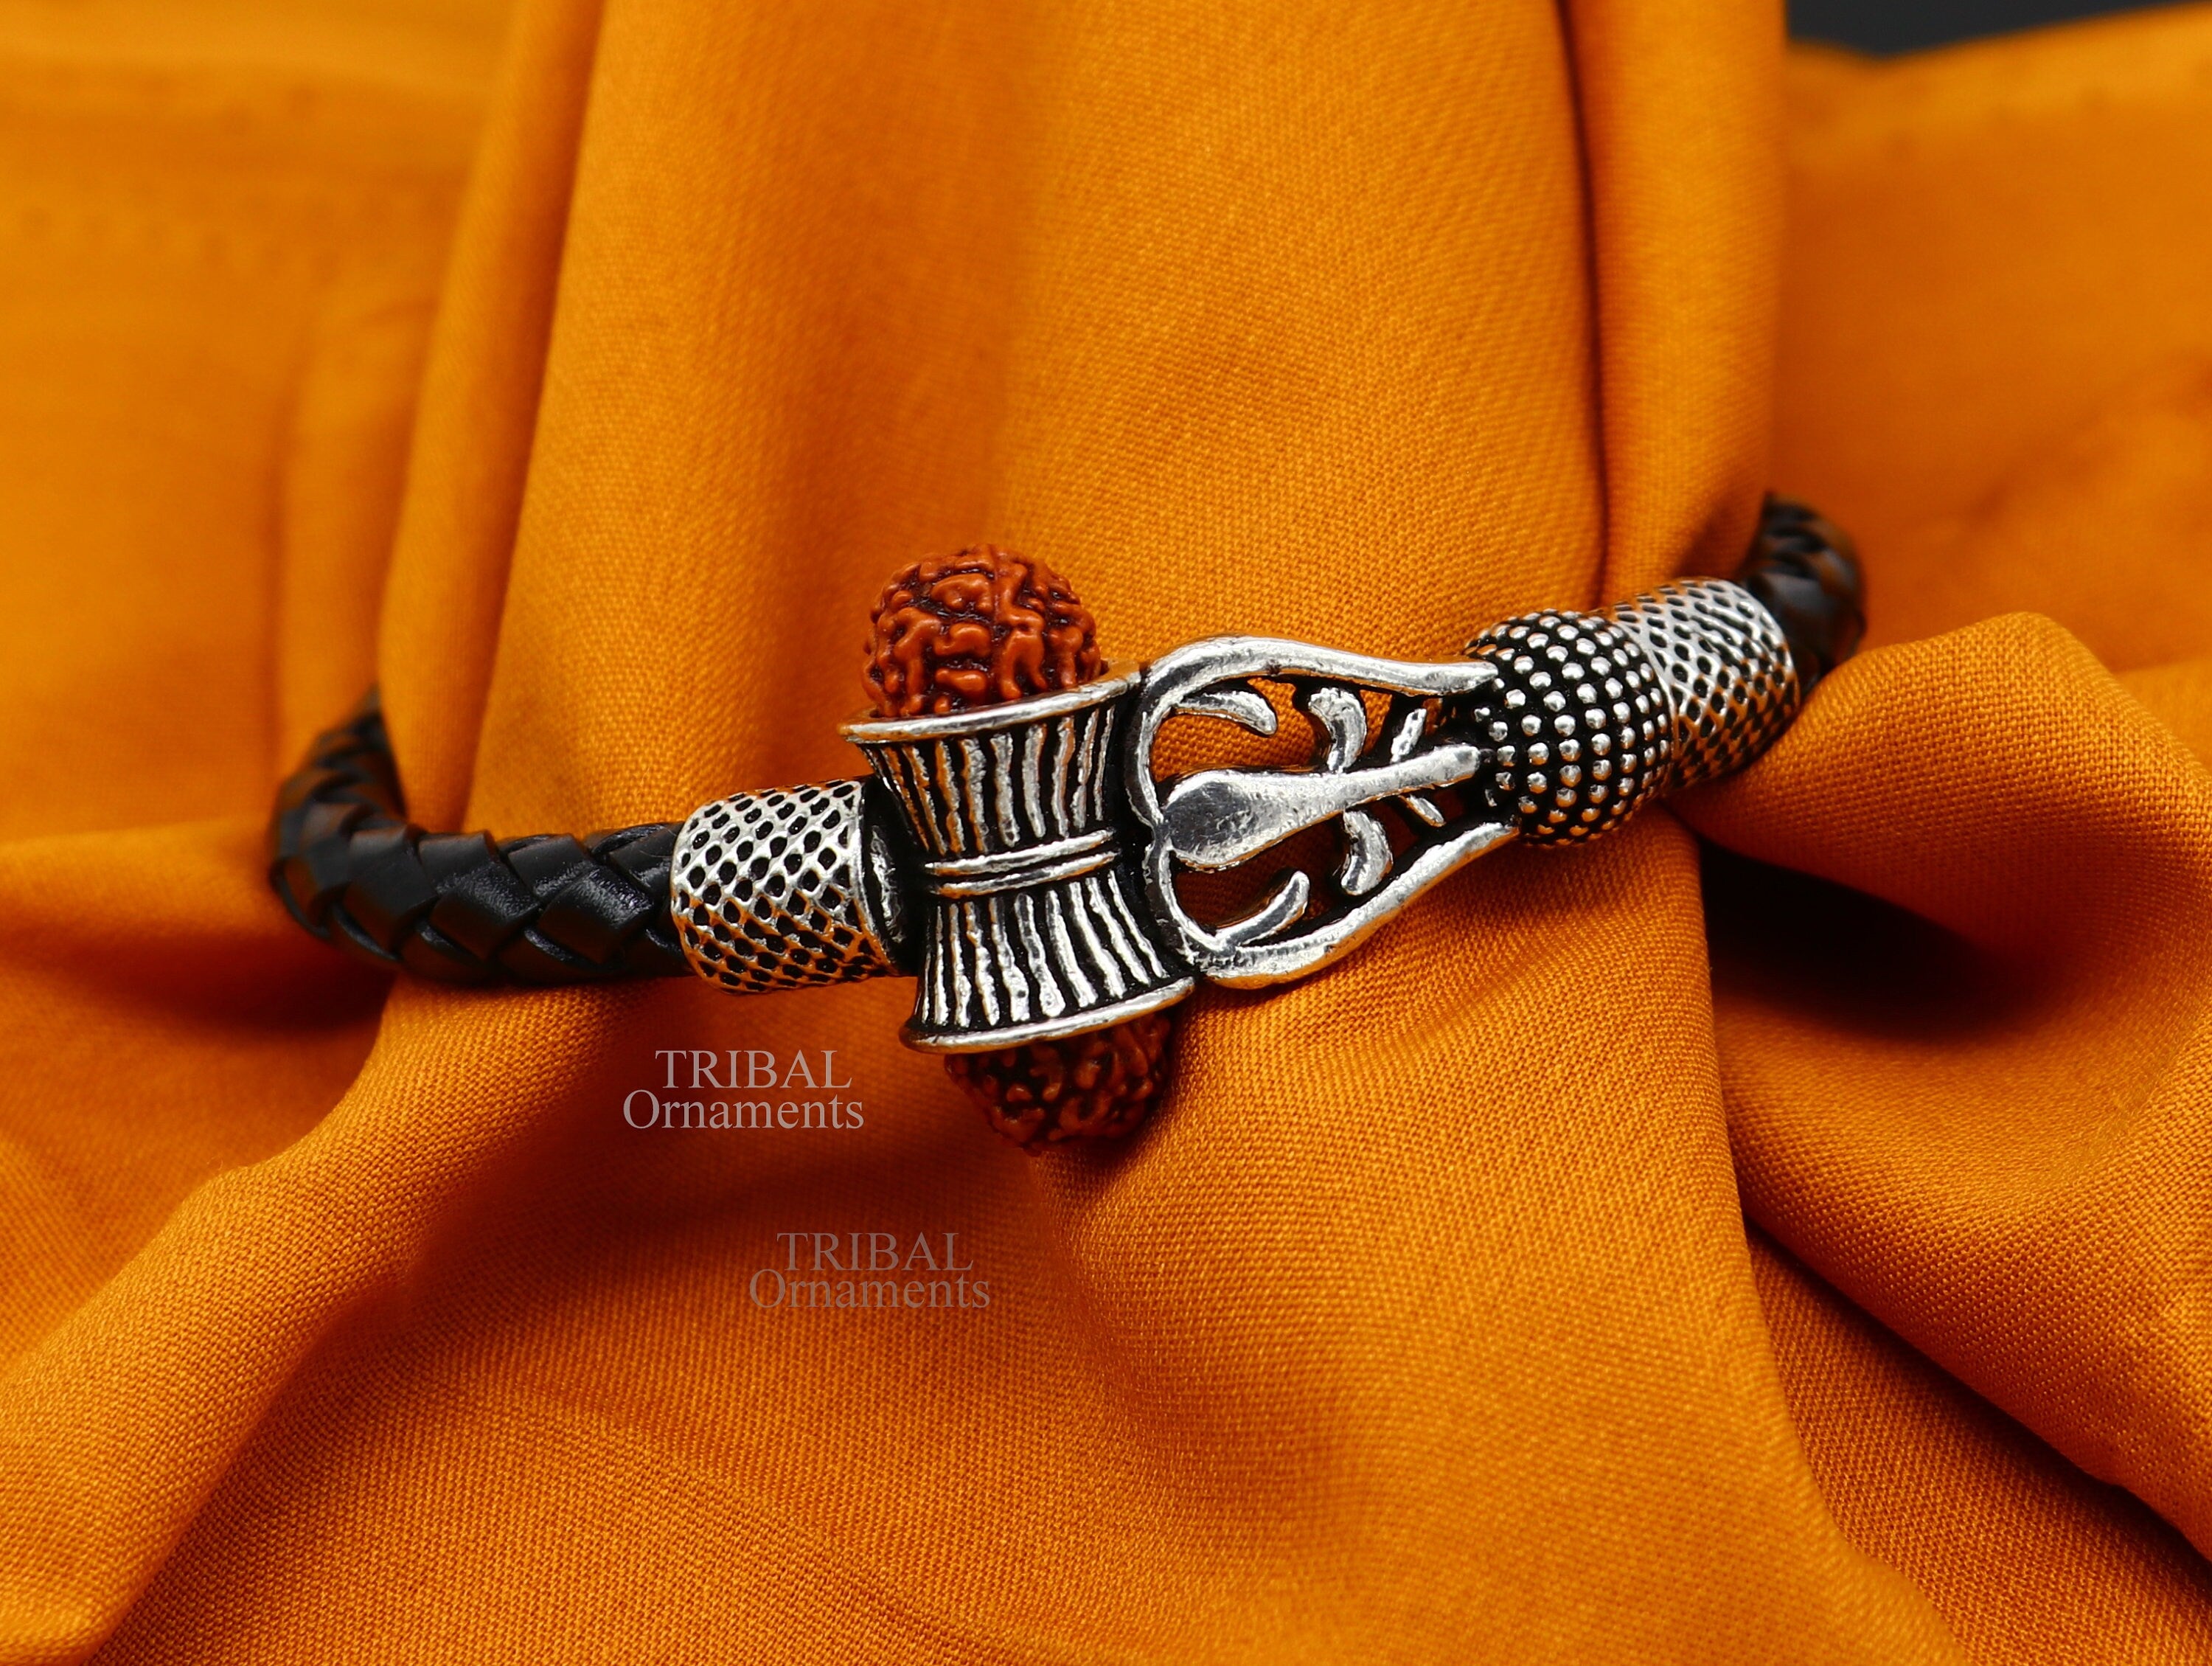 Aum Namah Shiva Bracelet (Kada) in Sterling Silver